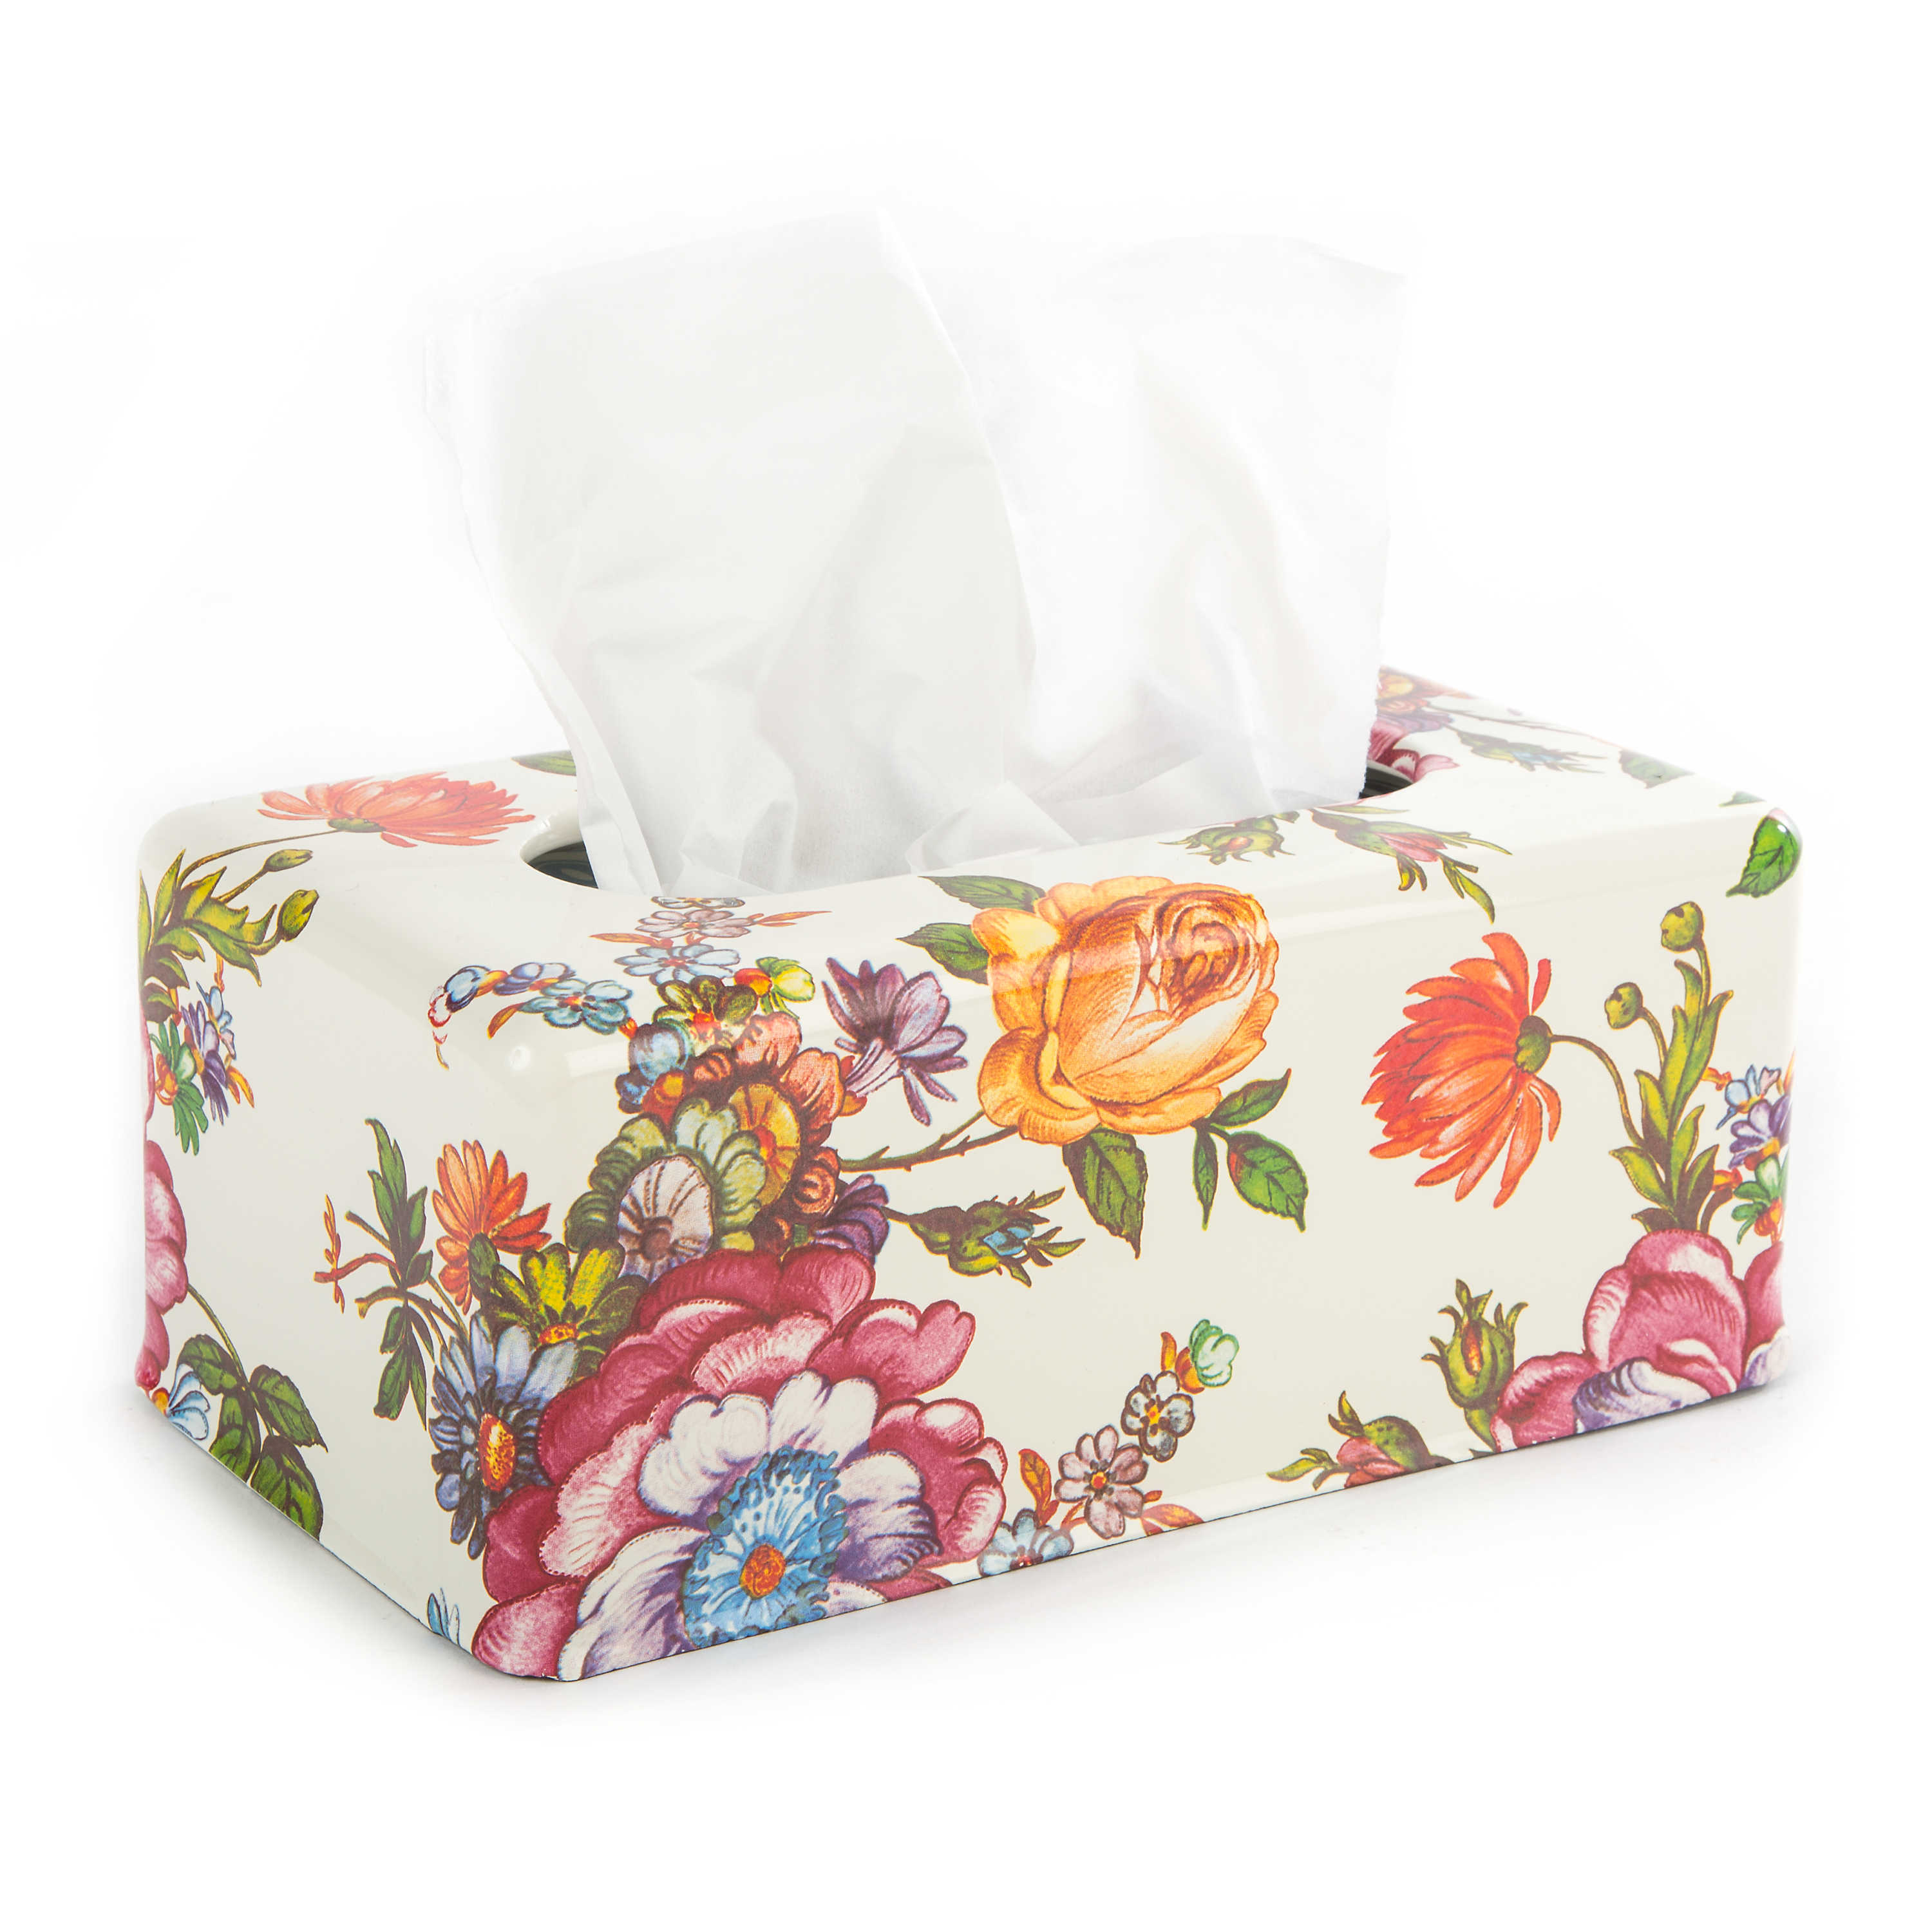 Flower Market Standard Tissue Box Holder - White mackenzie-childs Panama 0